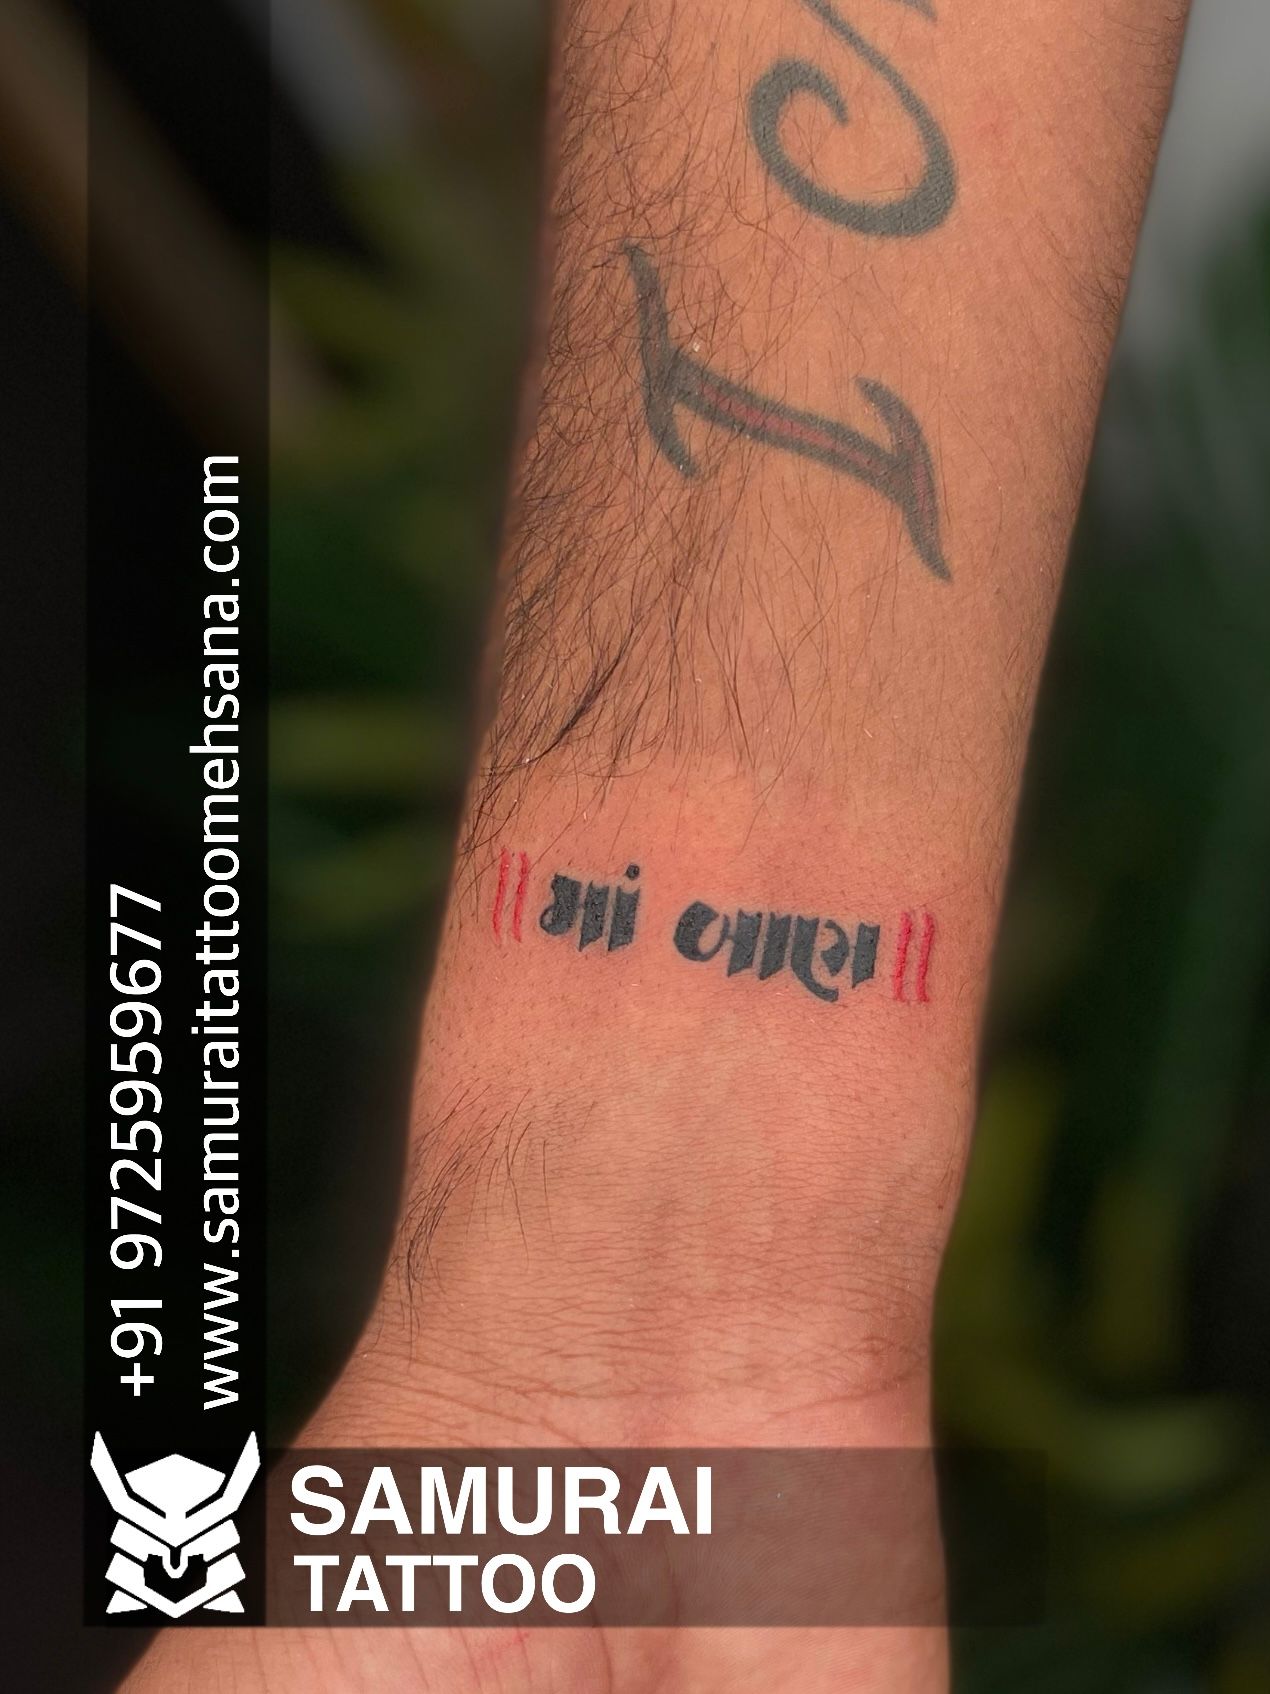 My tattoo pays tribute to my history with mental illnesses | by Valeria  Merino | Medium